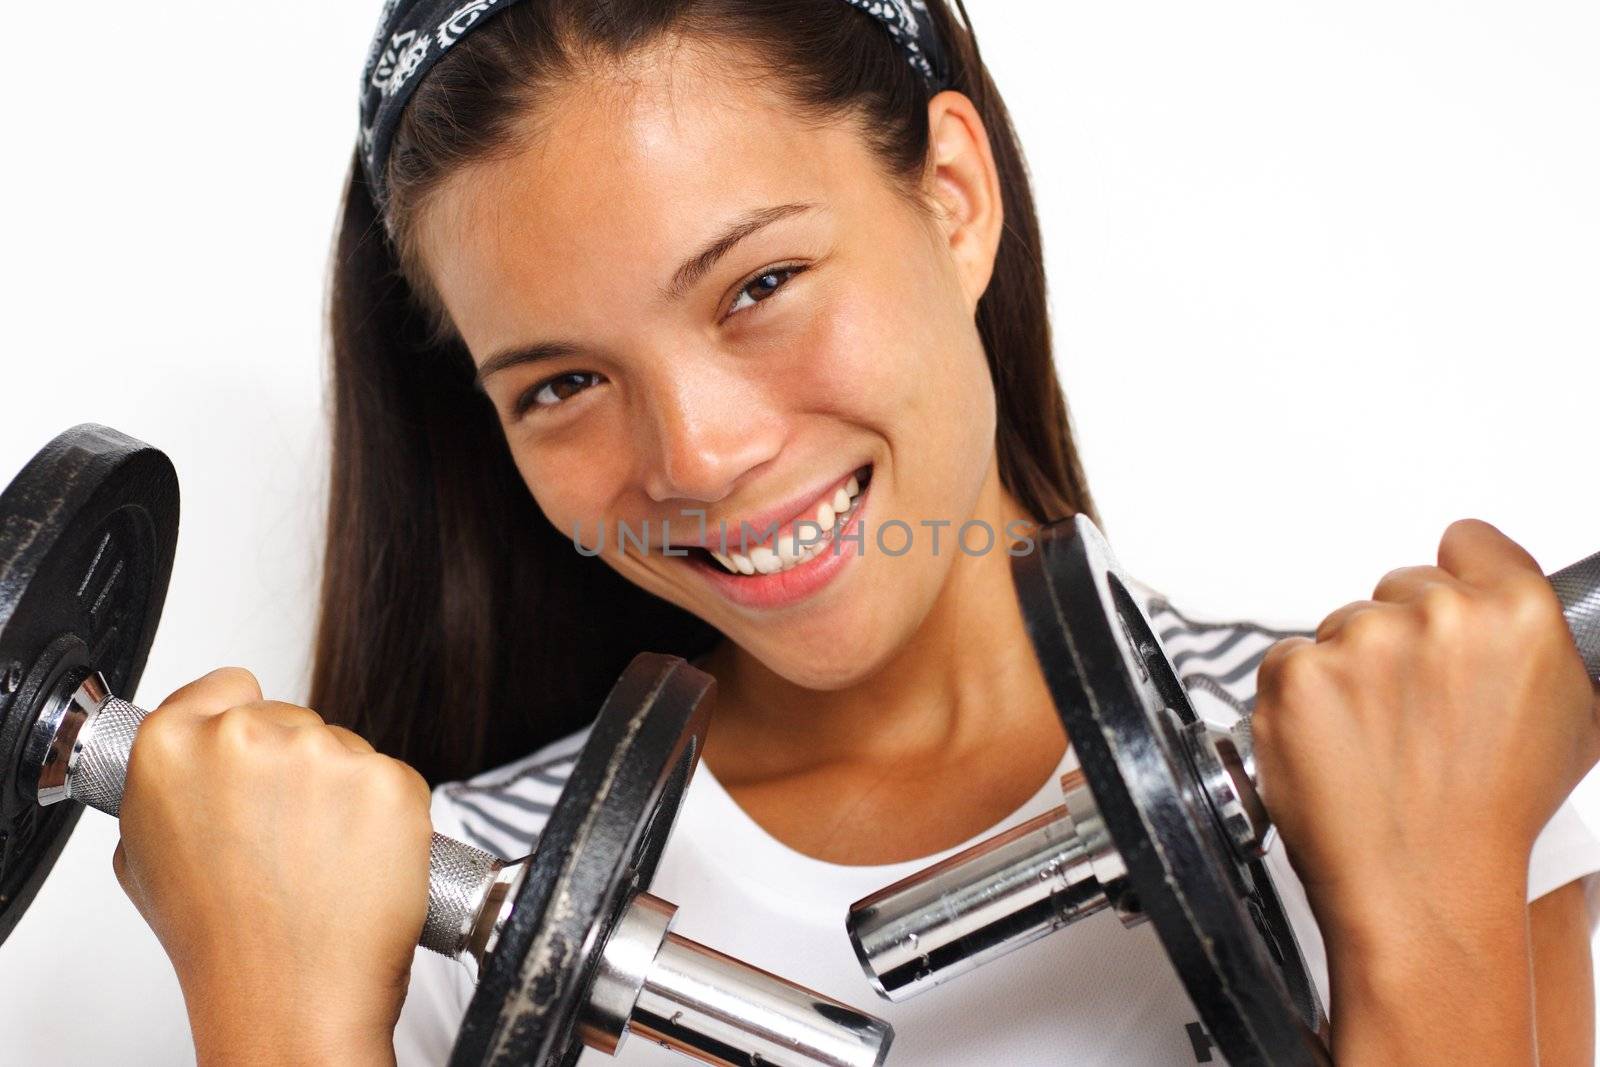 Attractive woman lifting weights and smiling at the camera. Closeup.